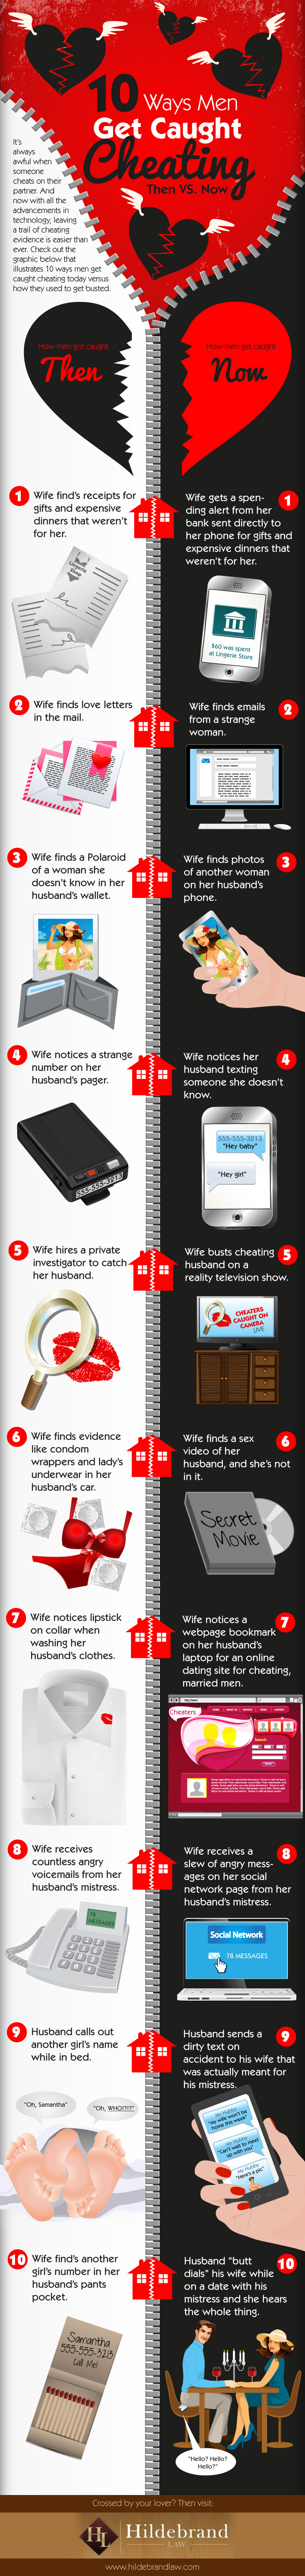 10 Ways Men Get Caught Cheating: Then Vs. Now